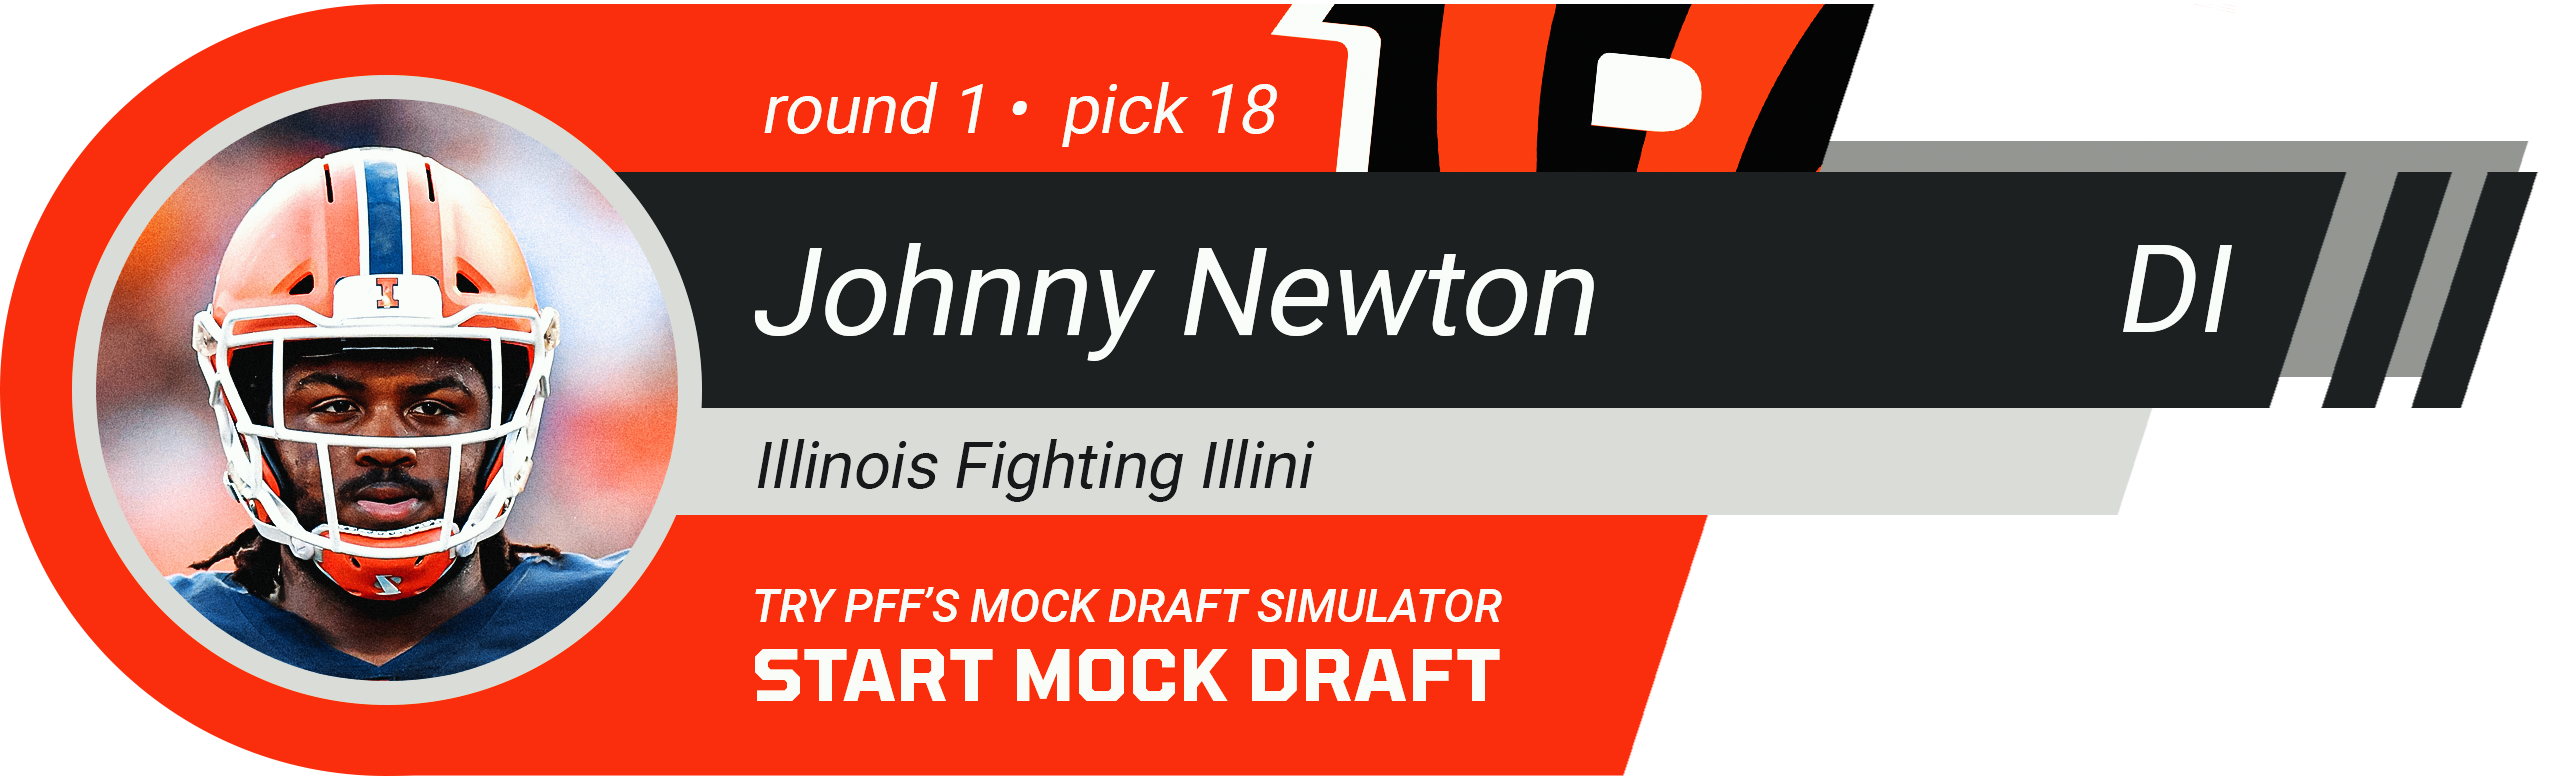 18. Cincinnati Bengals: DI Johnny Newton, Illinois